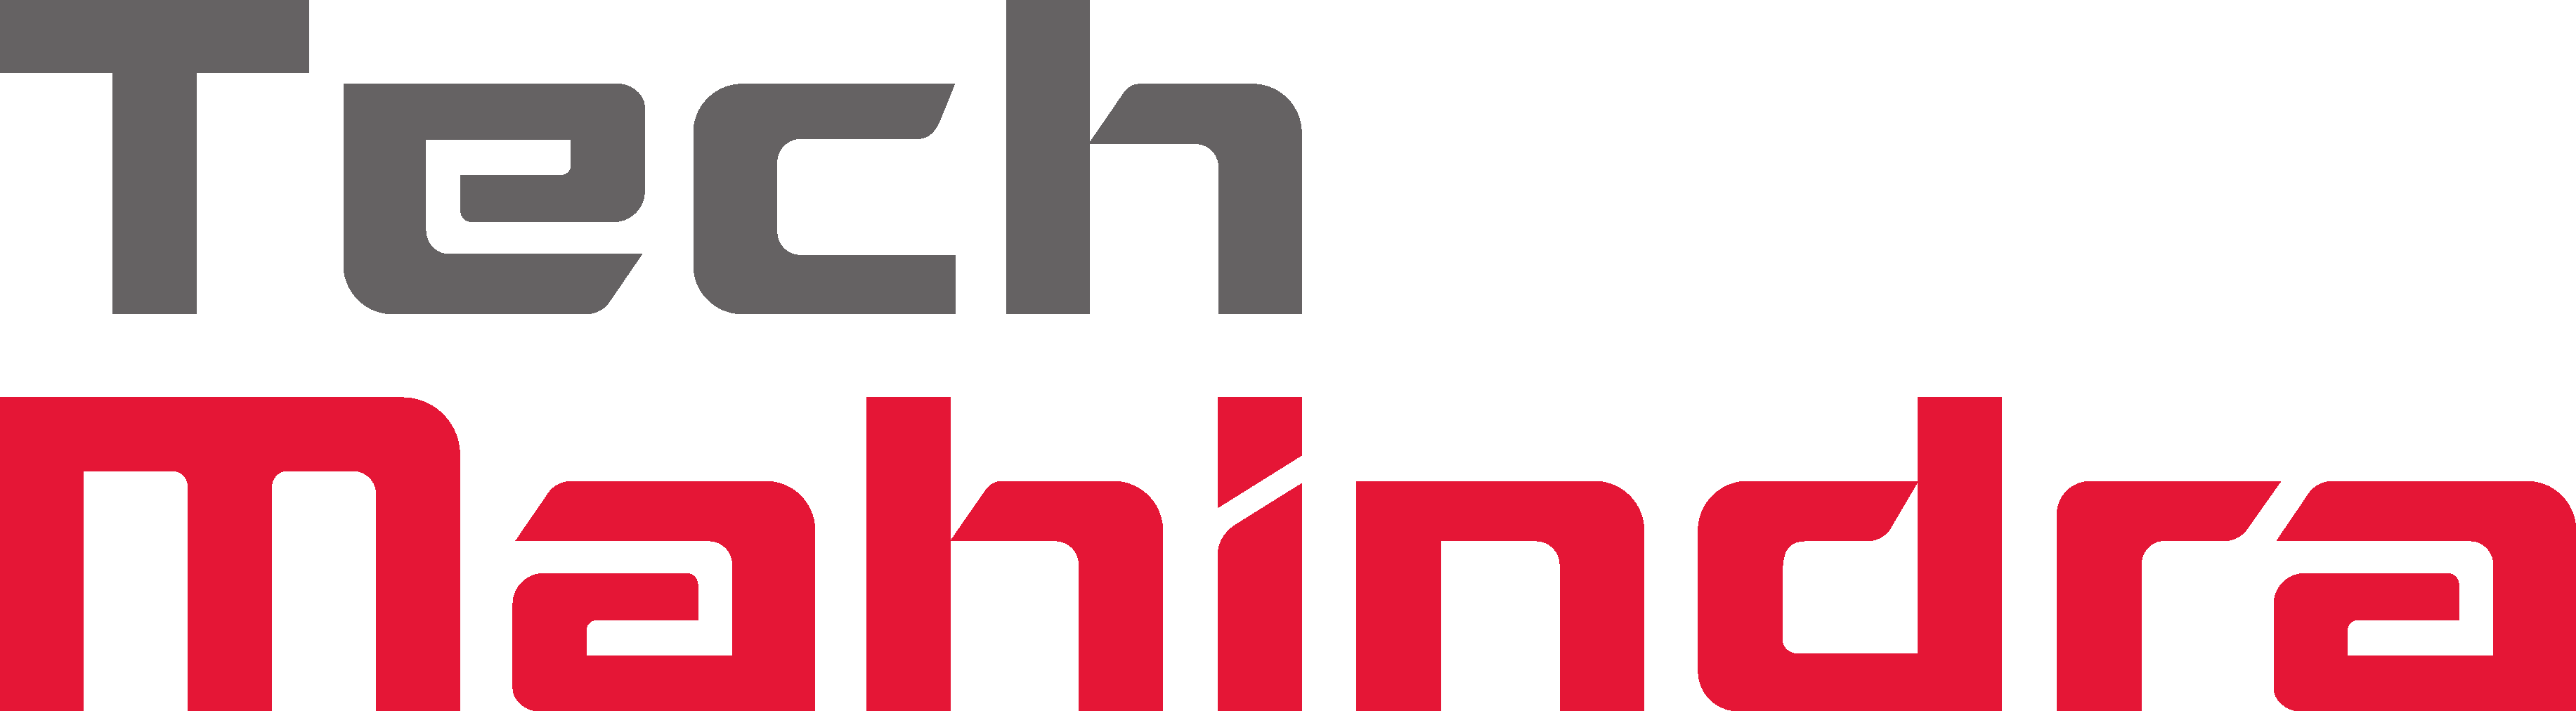 Tech Mahindra Logo png